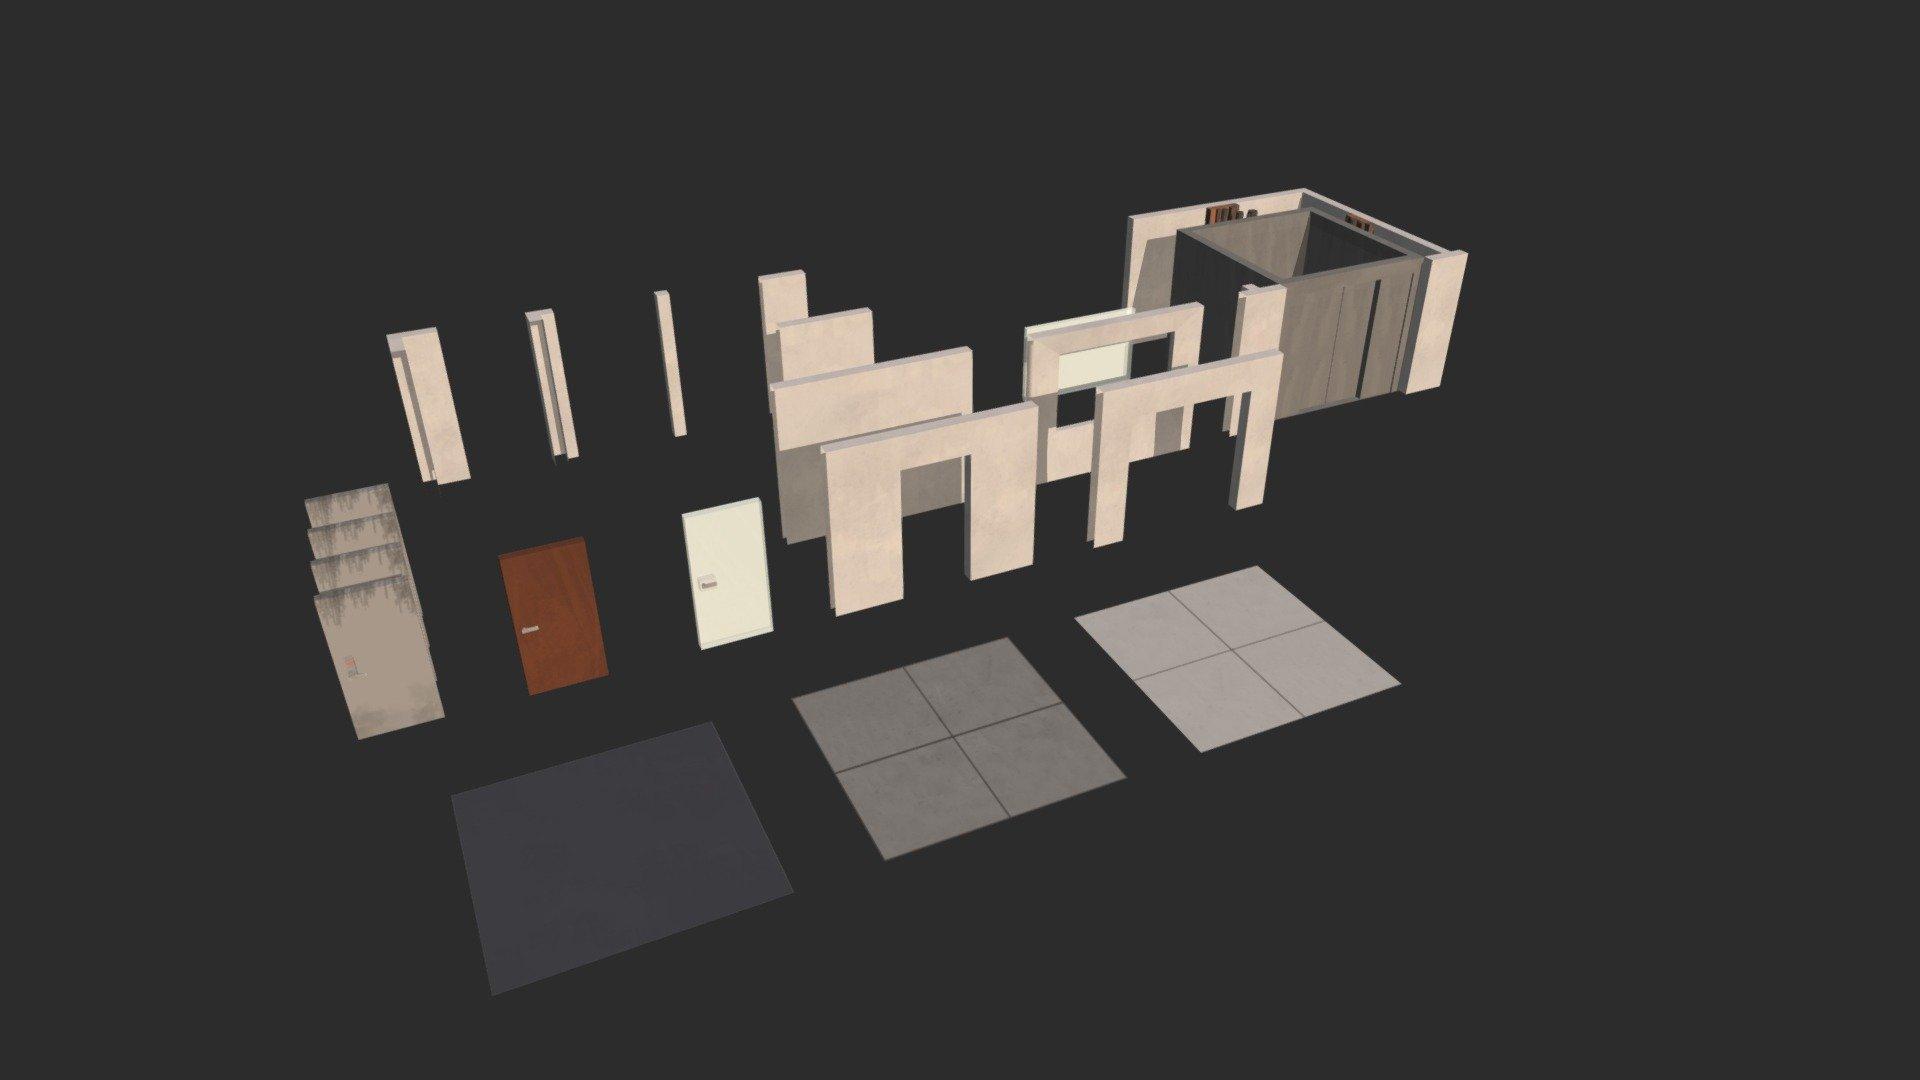 Modular elements of building